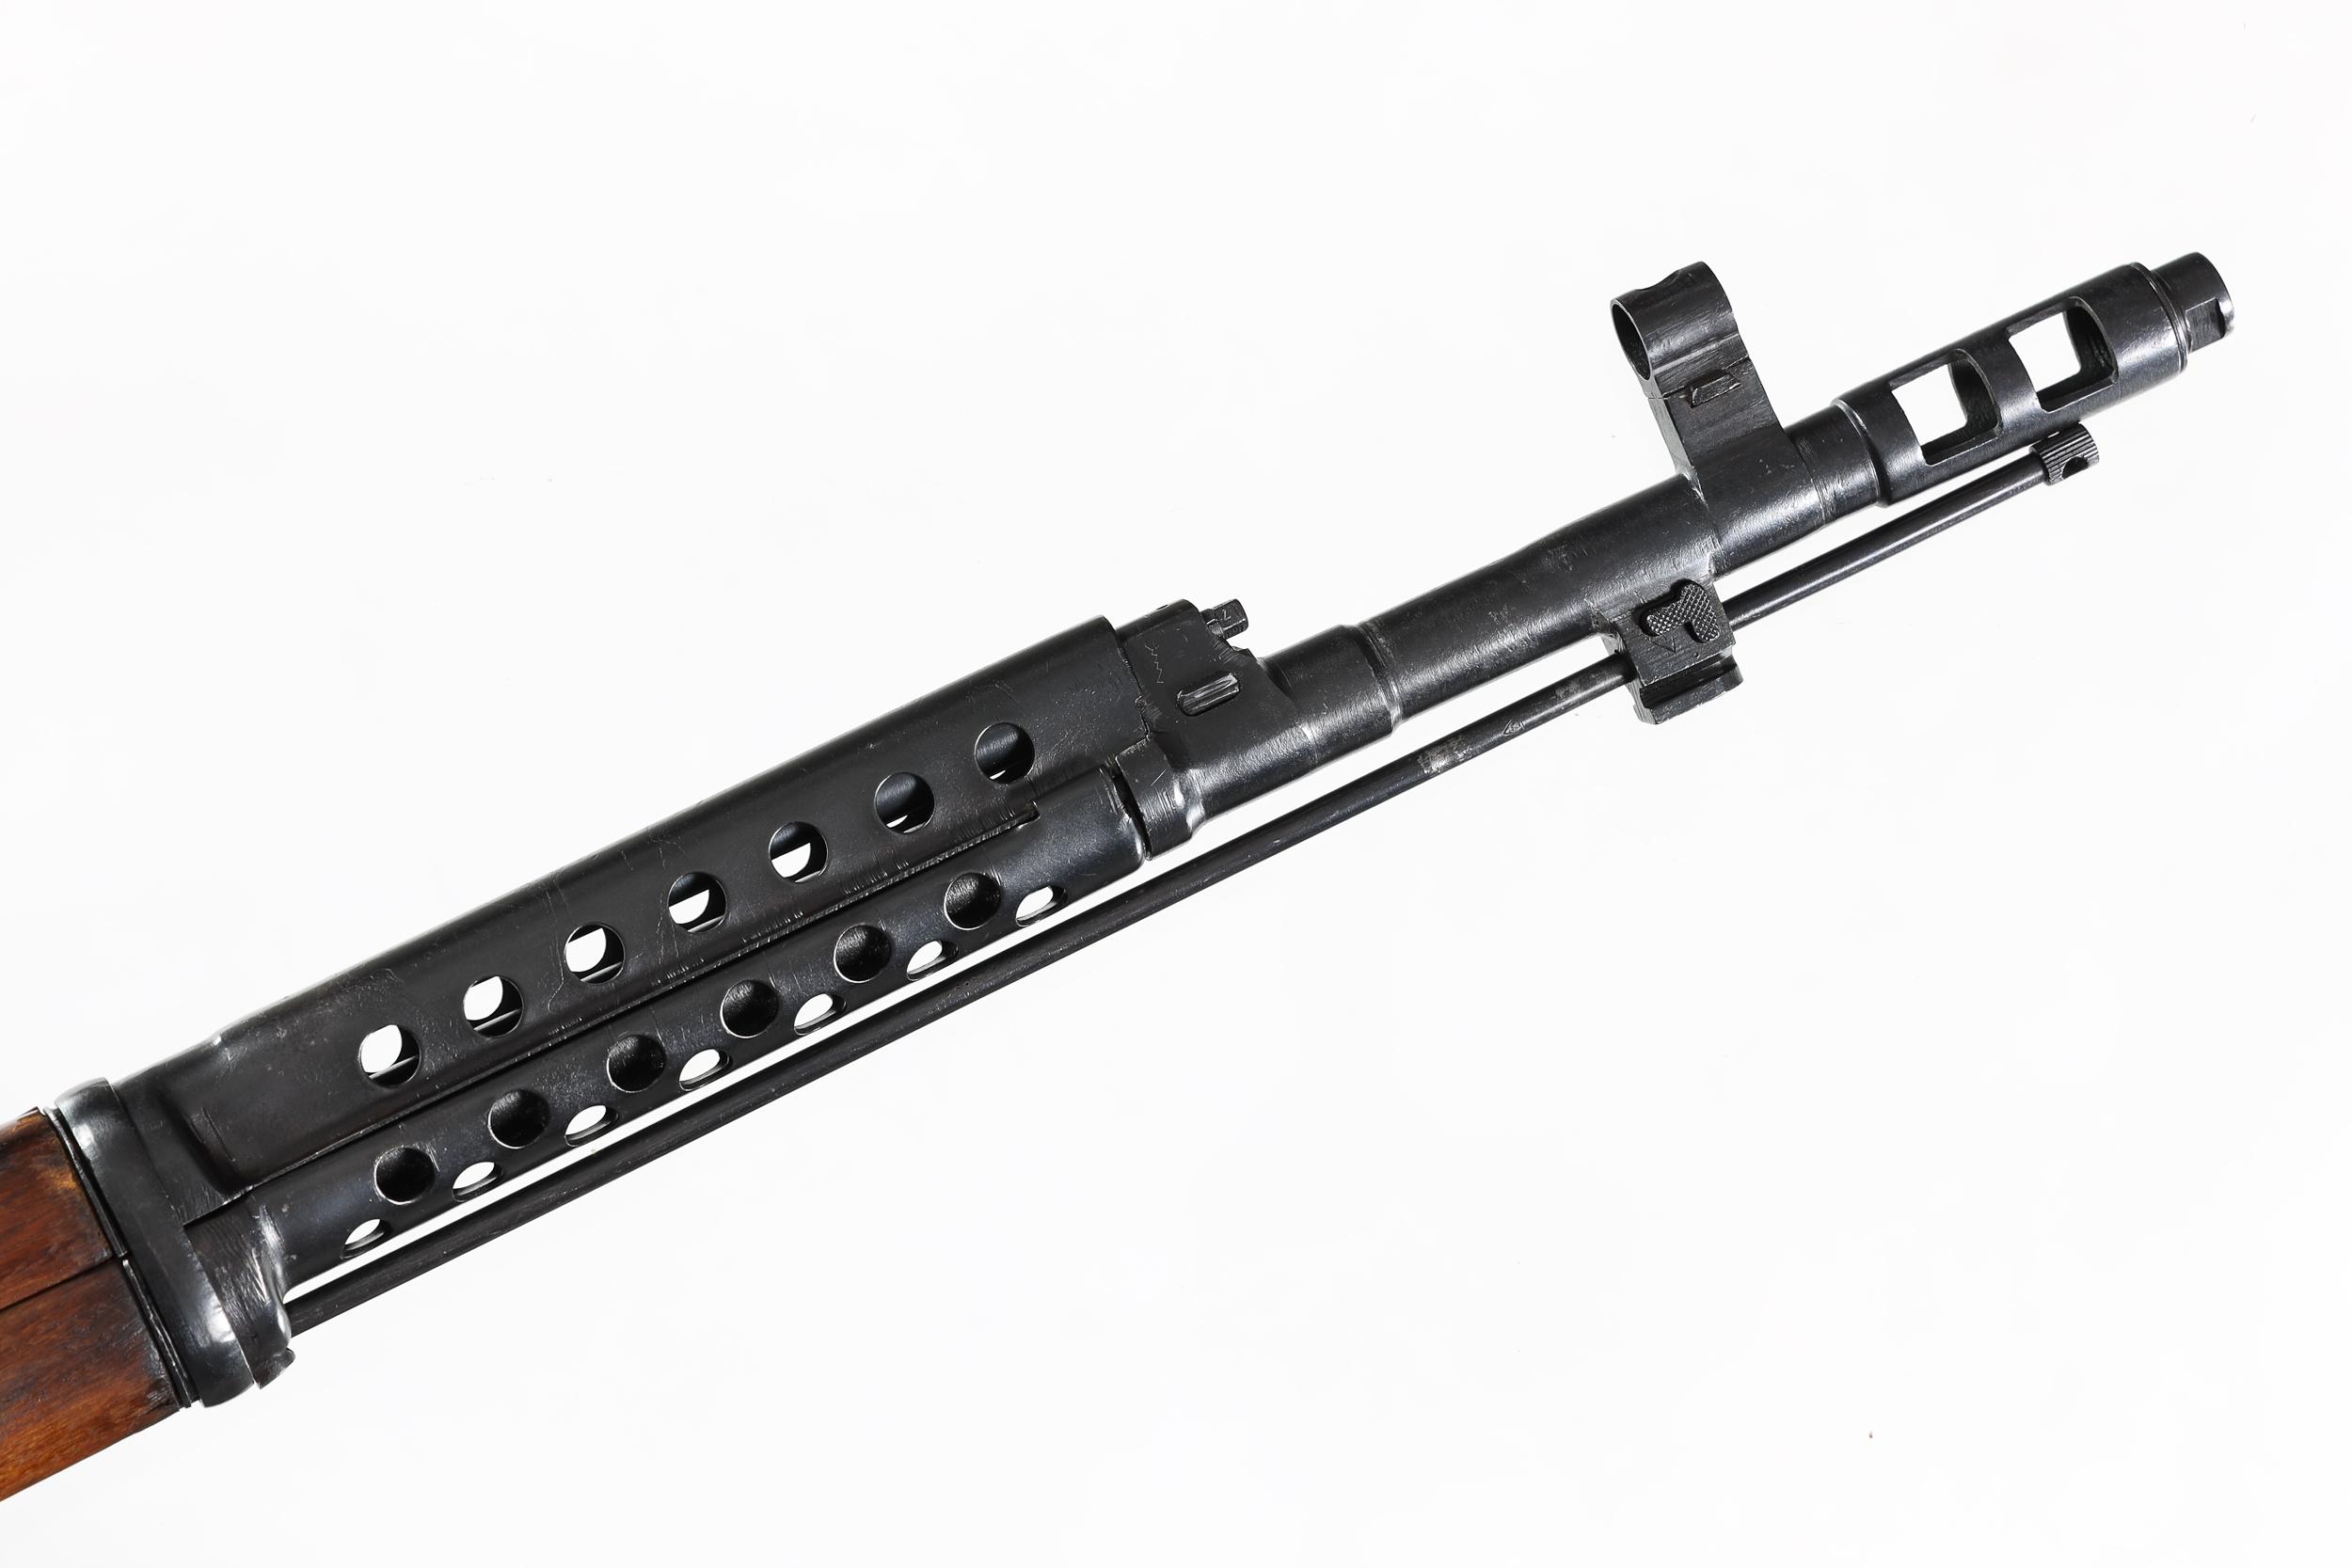 Tula Arsenal 1940 SVT Semi Rifle 7.62x54 R